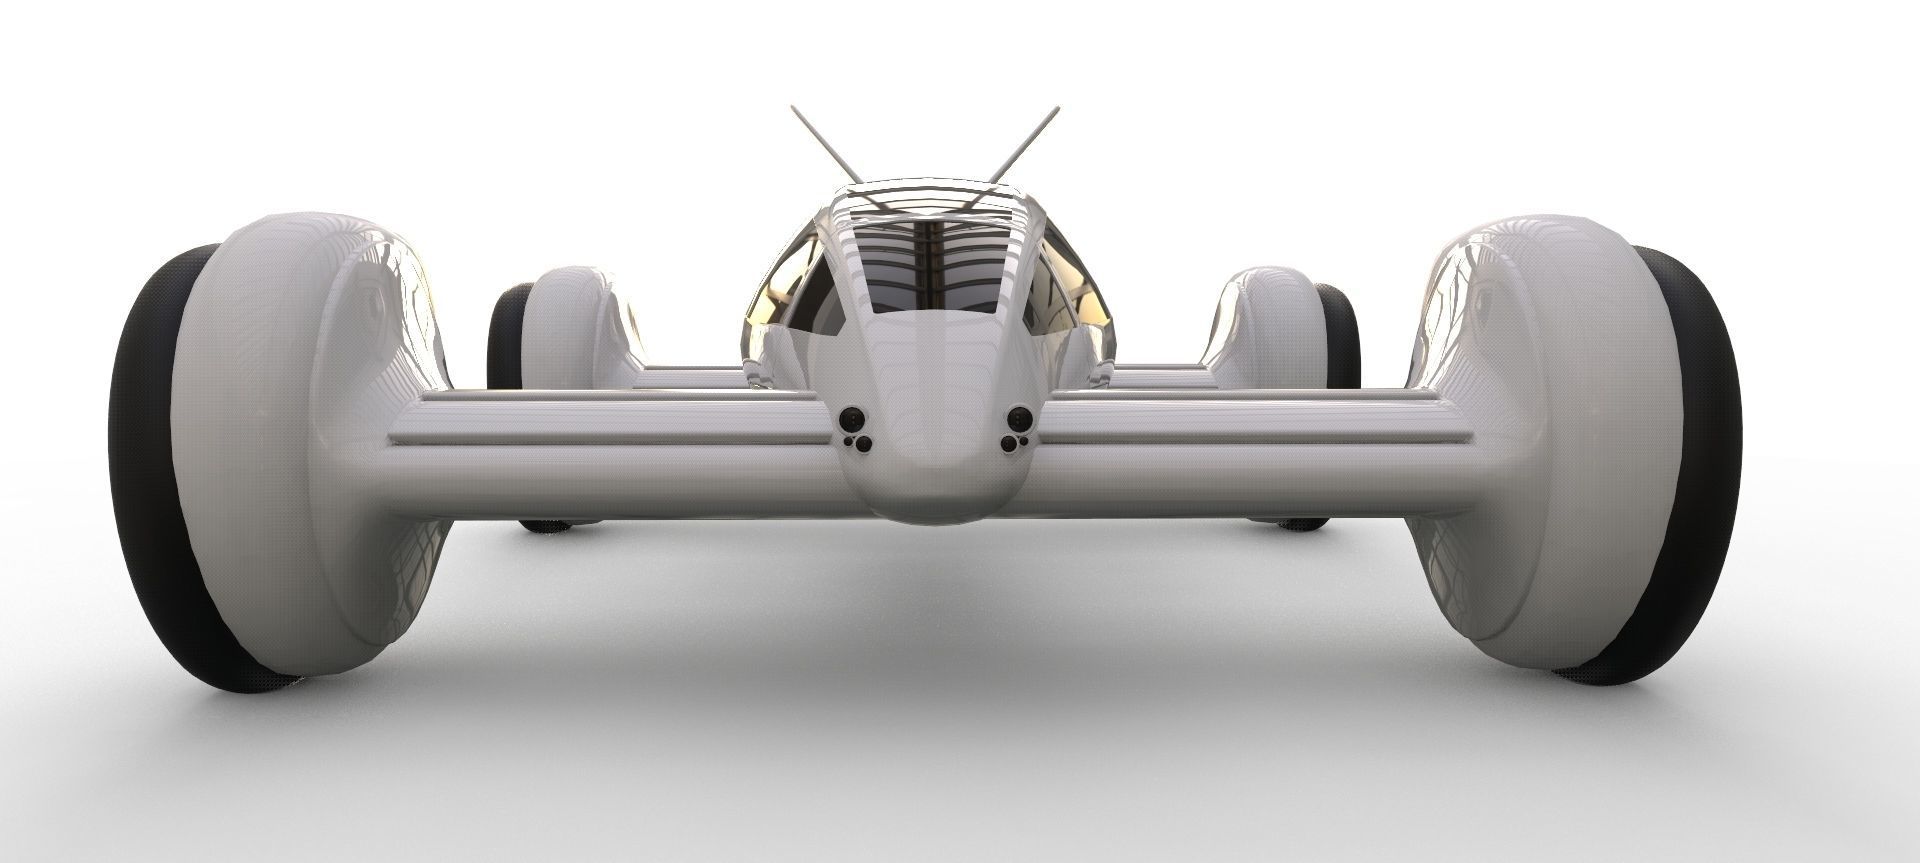 Flying car concept